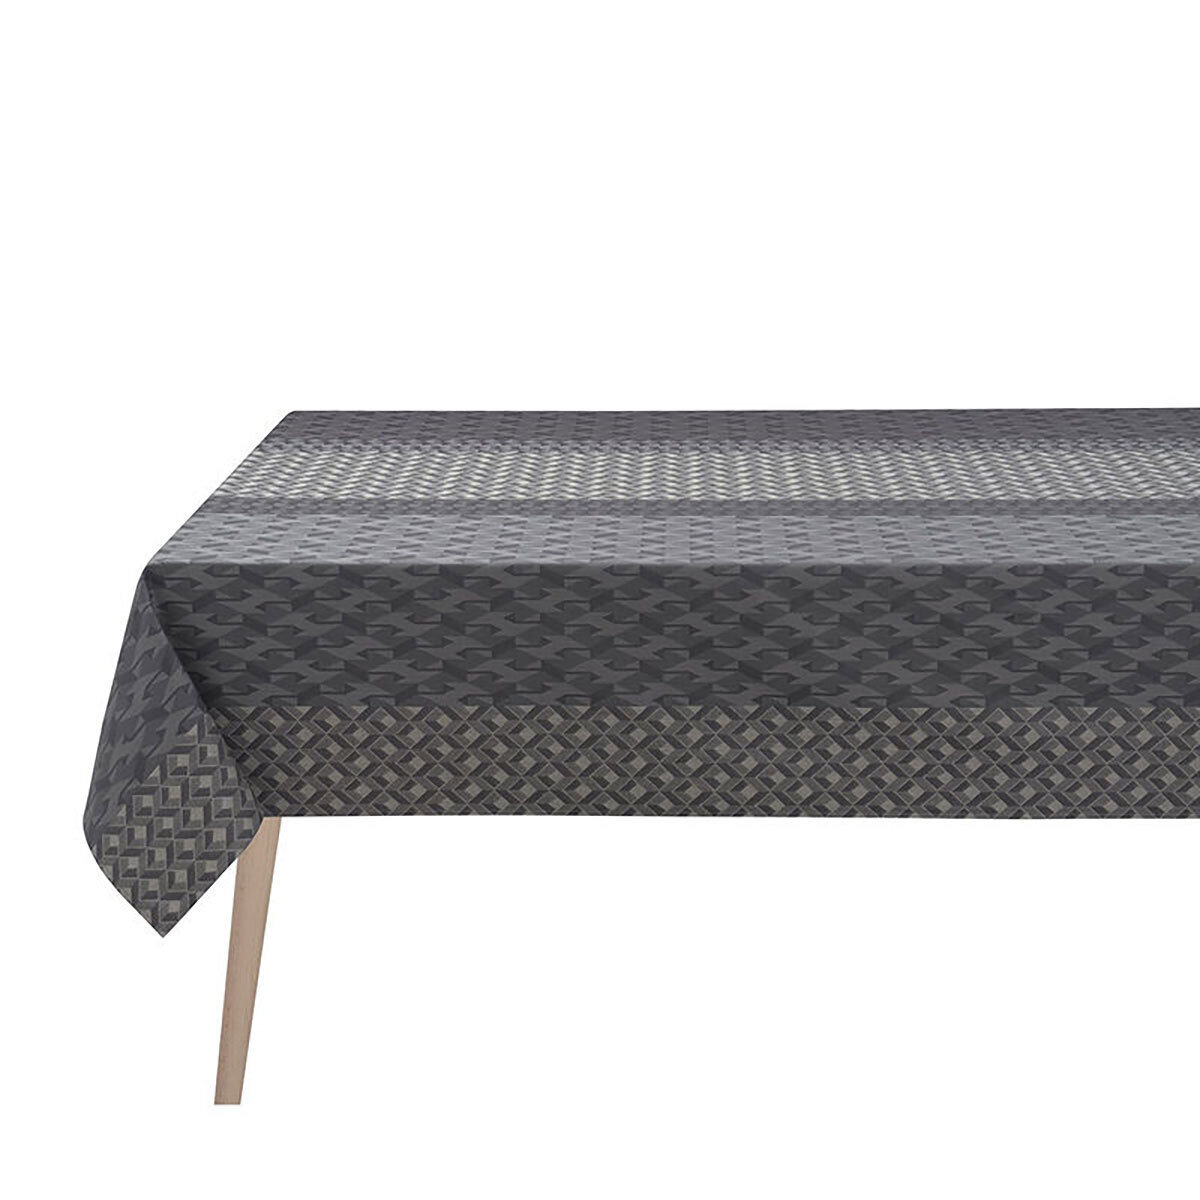 Le Jacquard Francais Tablecloth Caractere Grey 100% Coated Cotton 69 x 126 Inch 28215